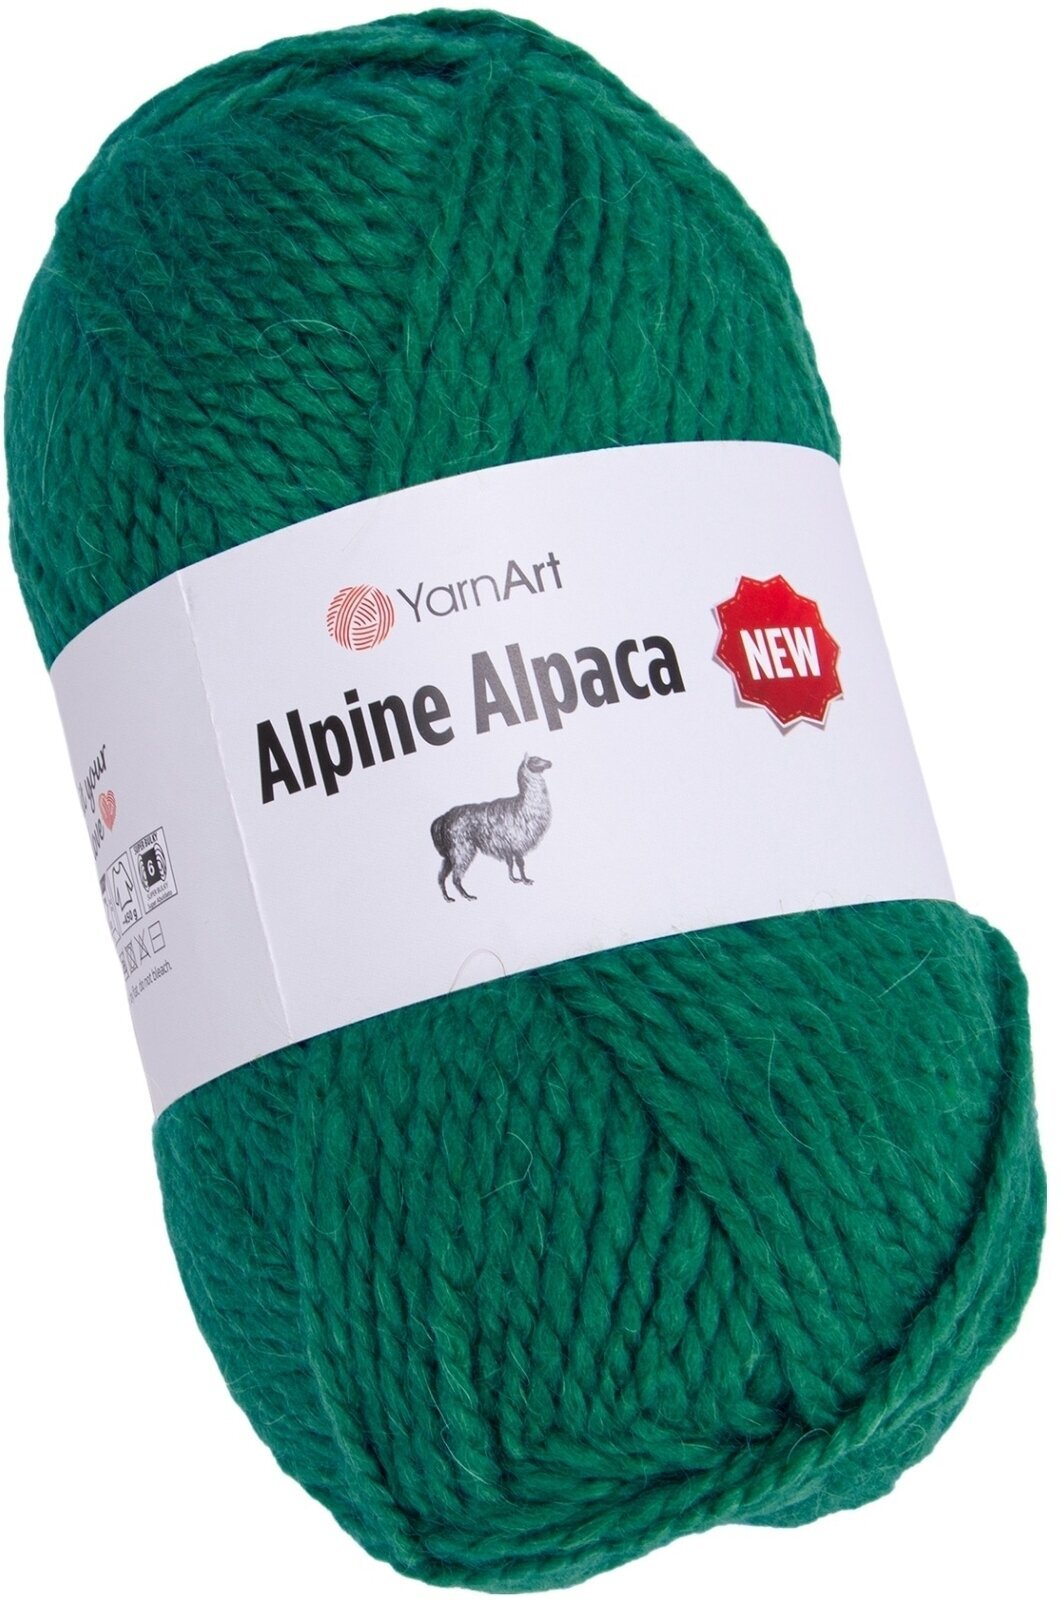 Strikkegarn Yarn Art Alpine Alpaca Strikkegarn 1449